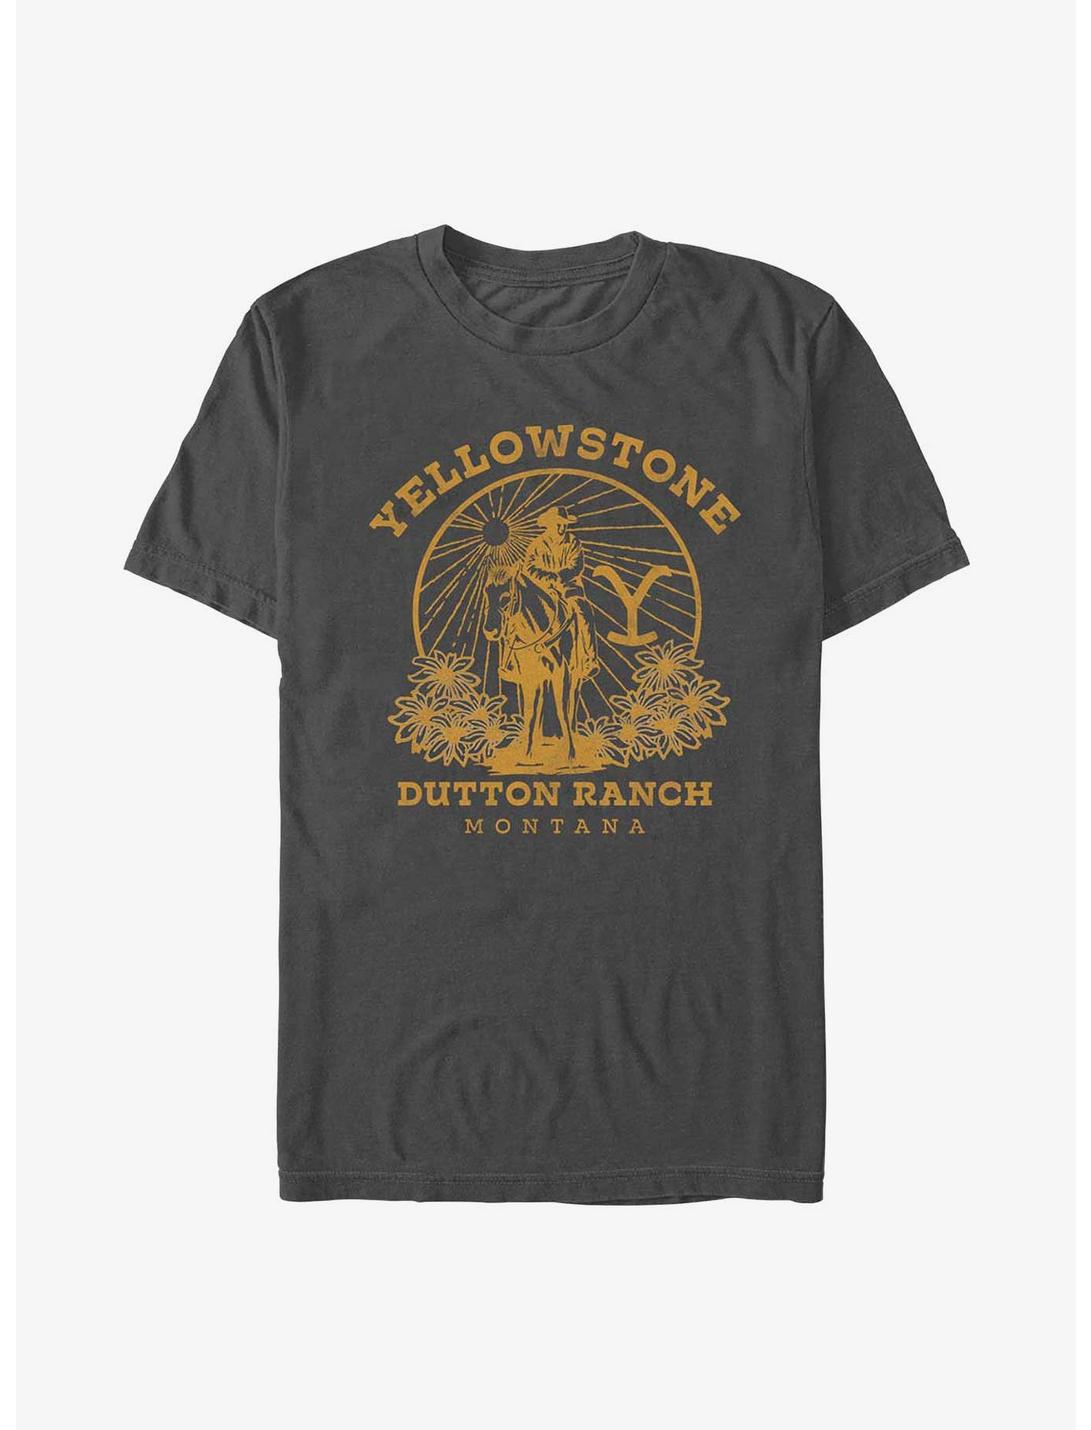 Yellowstone Dutton Ranch T-Shirt, CHARCOAL, hi-res